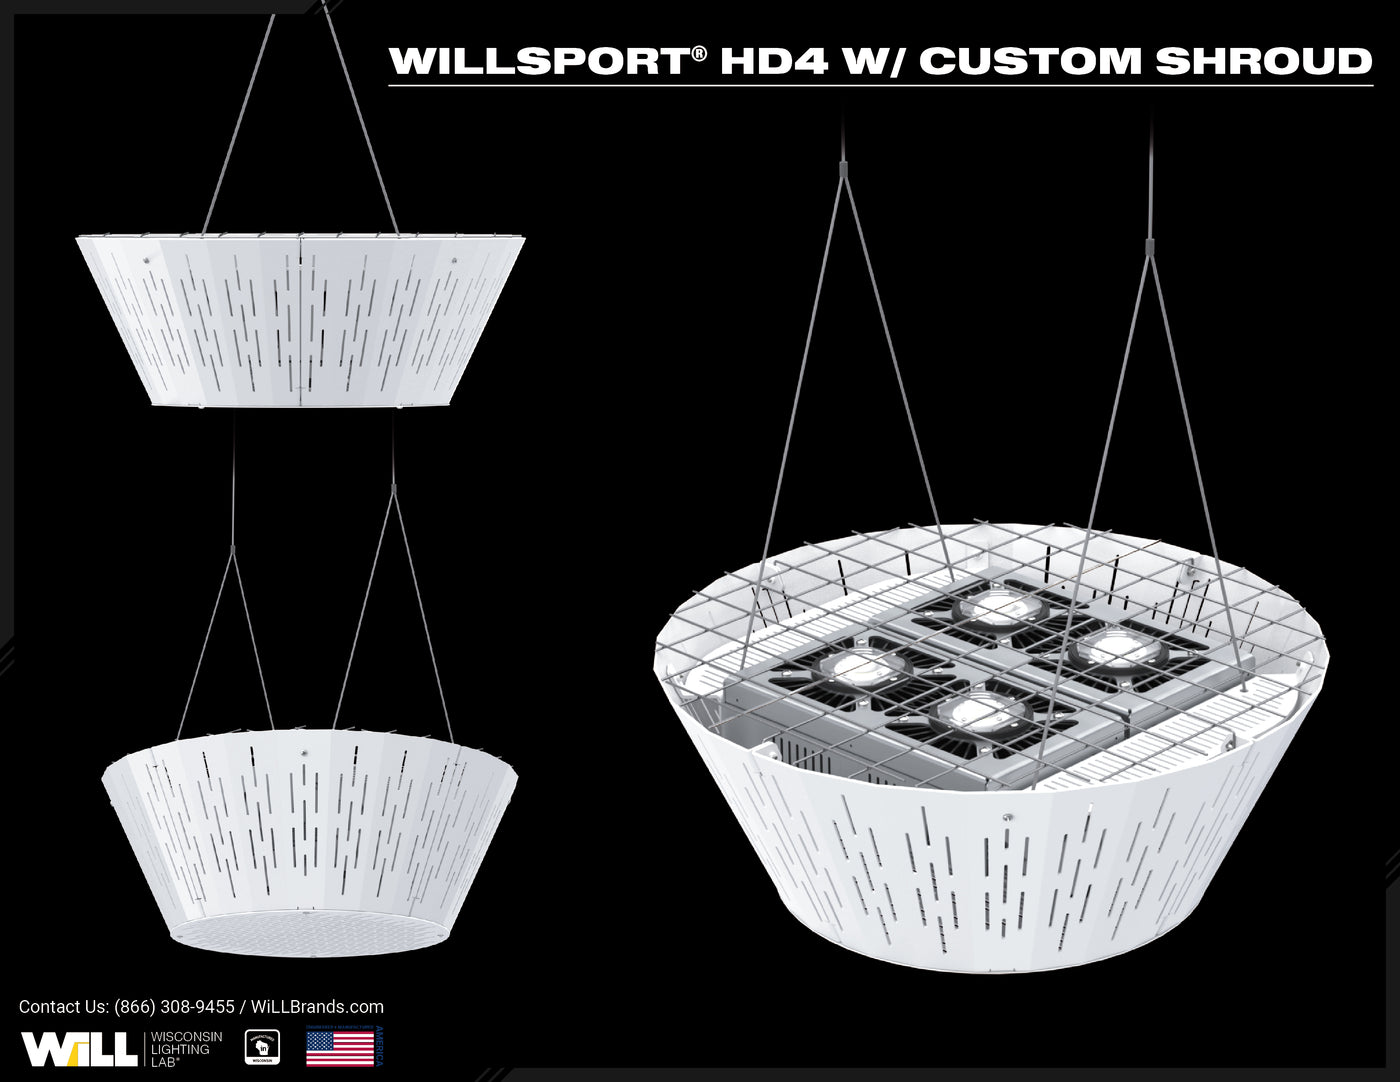 WiLLSPORT® HD4 WITH CUSTOM SHROUD